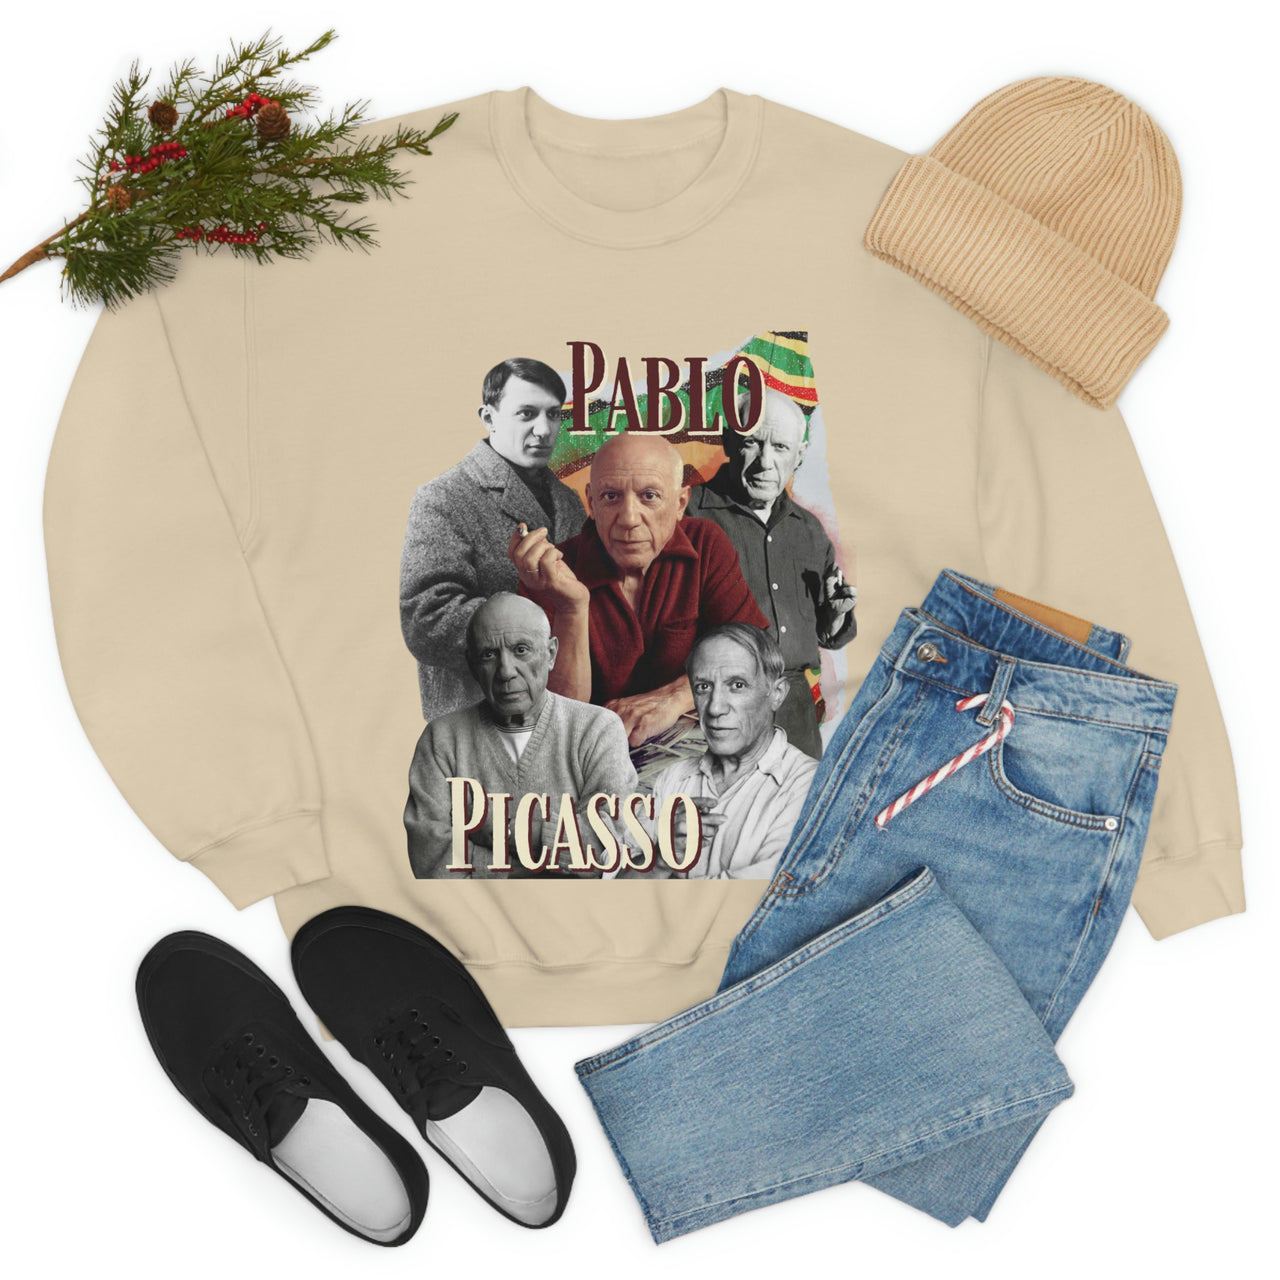 Pablo Picasso Sweatshirt, Y2K Style Bootleg Famous Spanish Artist Fan Retro Pullover Crewneck, Artist Gift